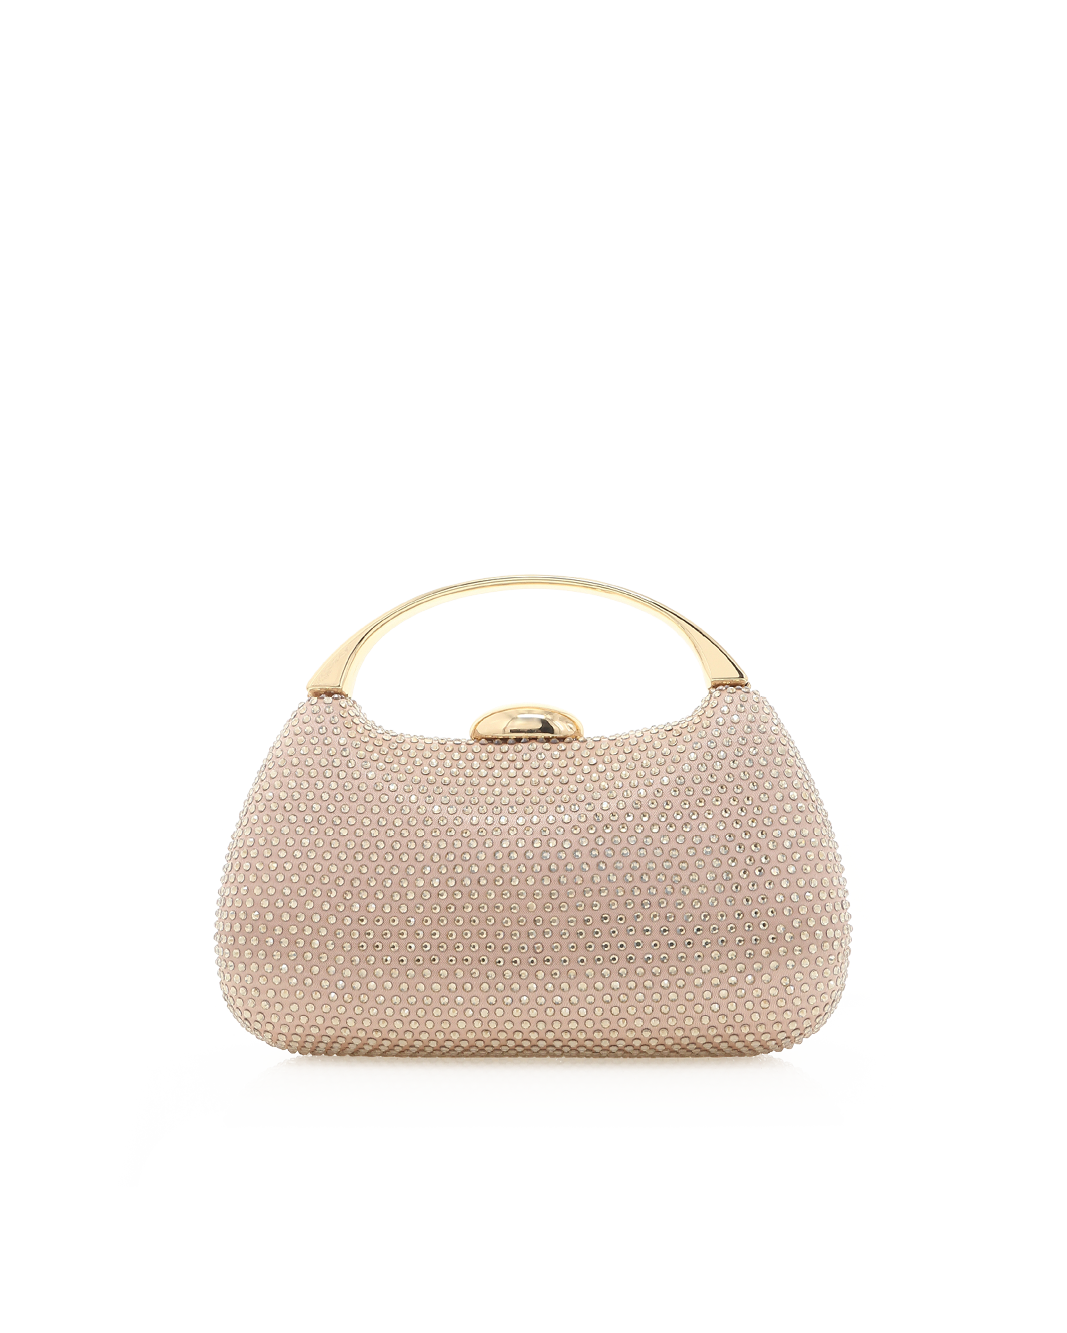 GEORGIA HANDLE BAG - NUDE SATIN-NUDE DIAMANTE-Handbags-Billini-O/S-Billini